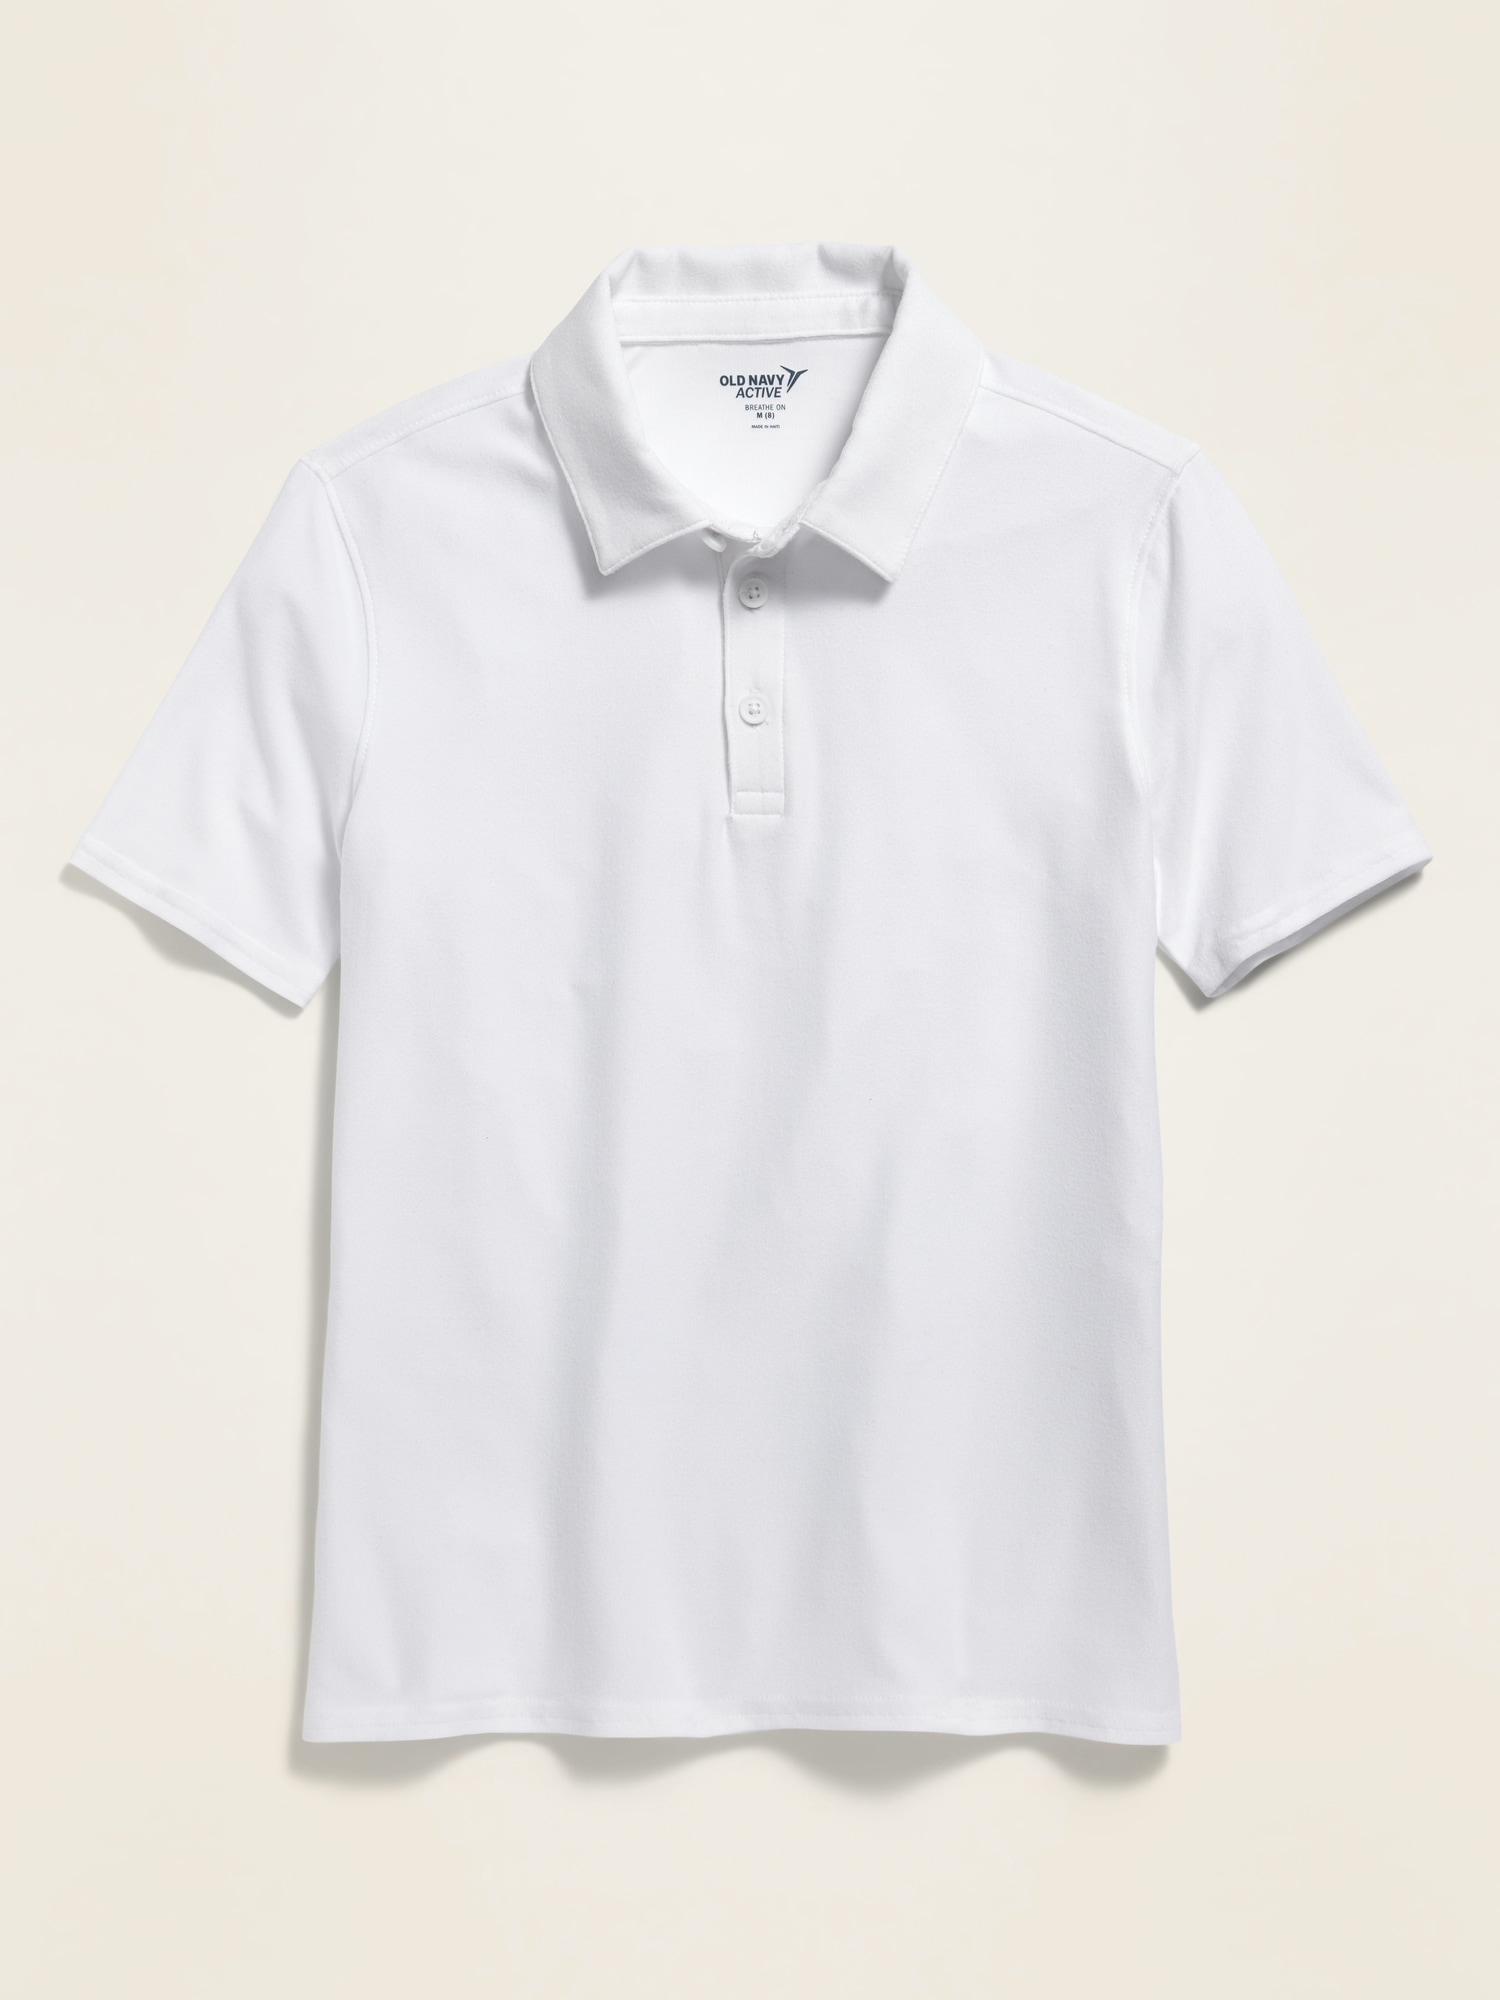 Old Navy Kids' School Uniform Pique Polo Shirt - - Size S